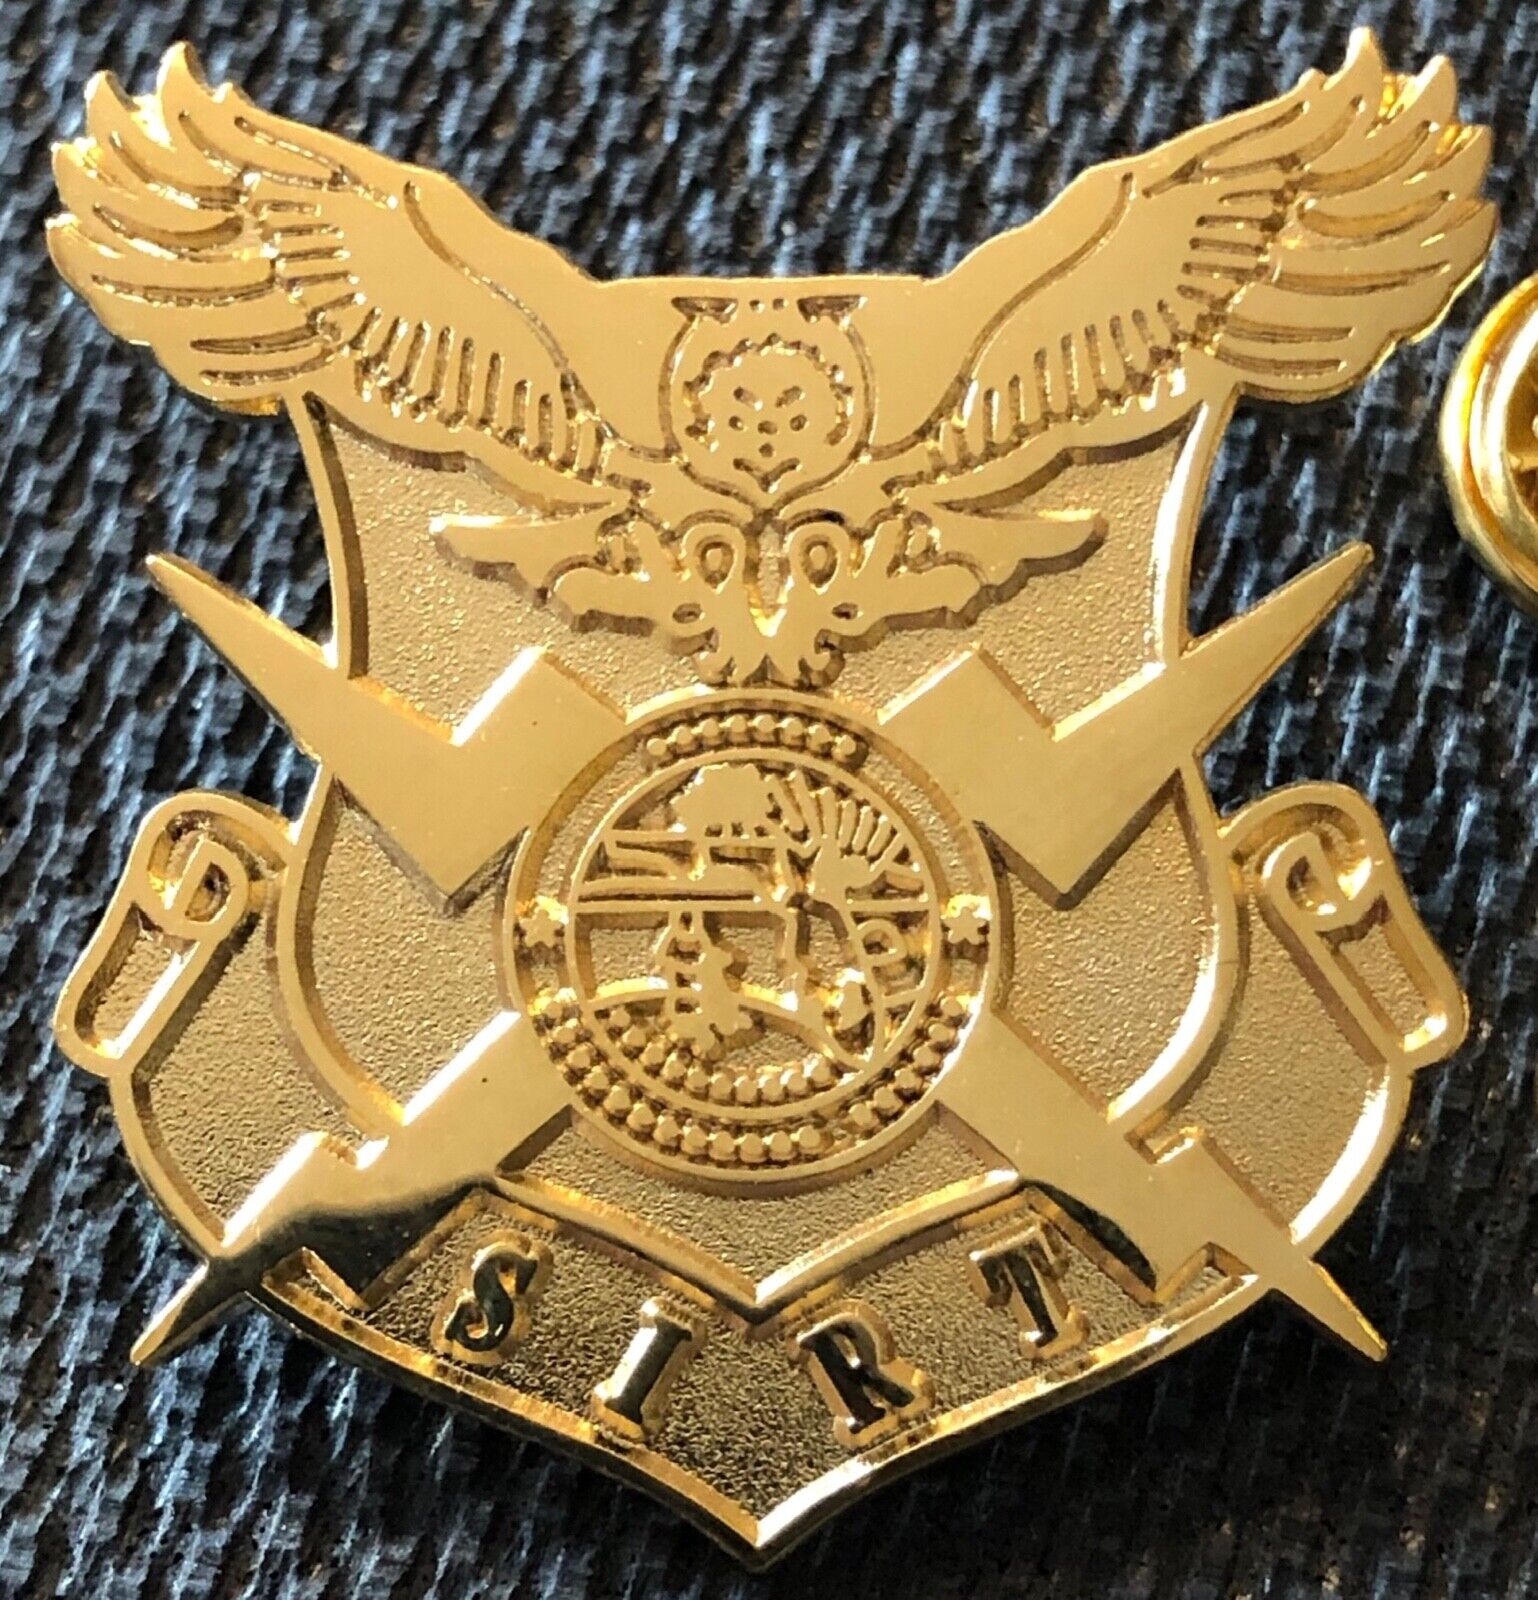 USMS - FBI - DEA - ATF - DHS - “S.I.R.T.” Team VERY RARE Gold version lapel Pin